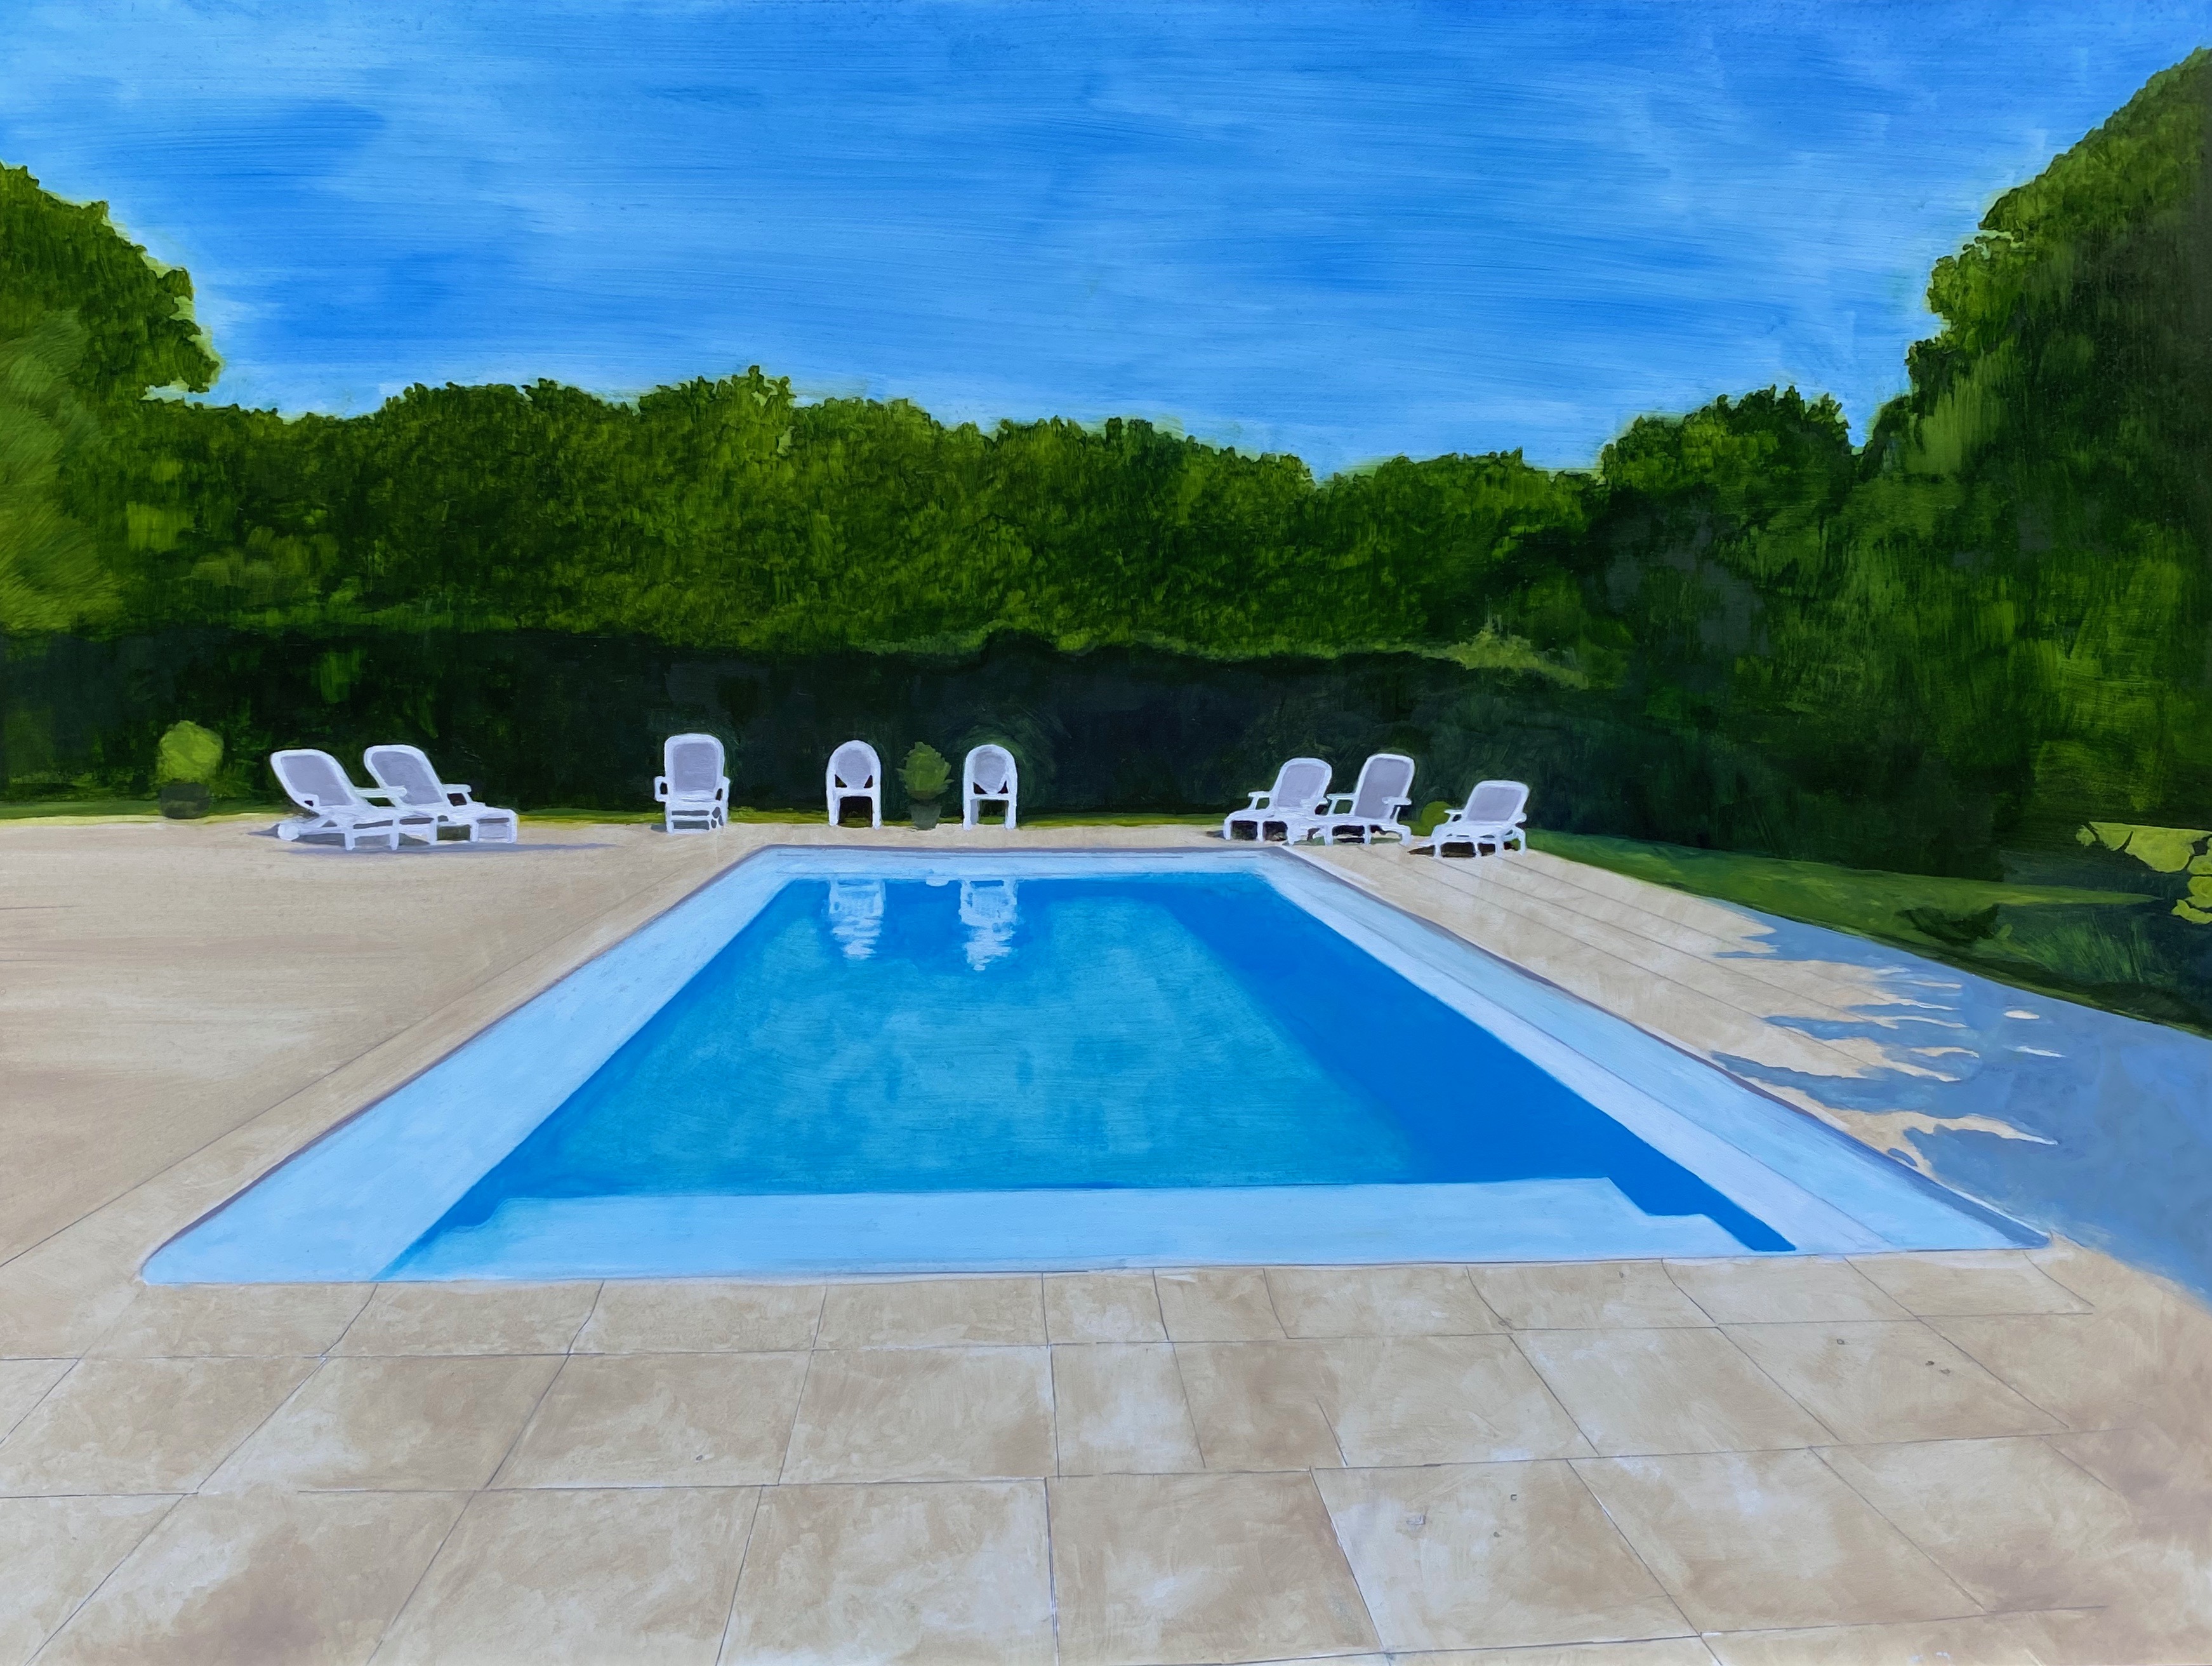 The Swimming Pool #3  by Chantel de Latour | Lethbridge 20000 2021 Finalists | Lethbridge Gallery